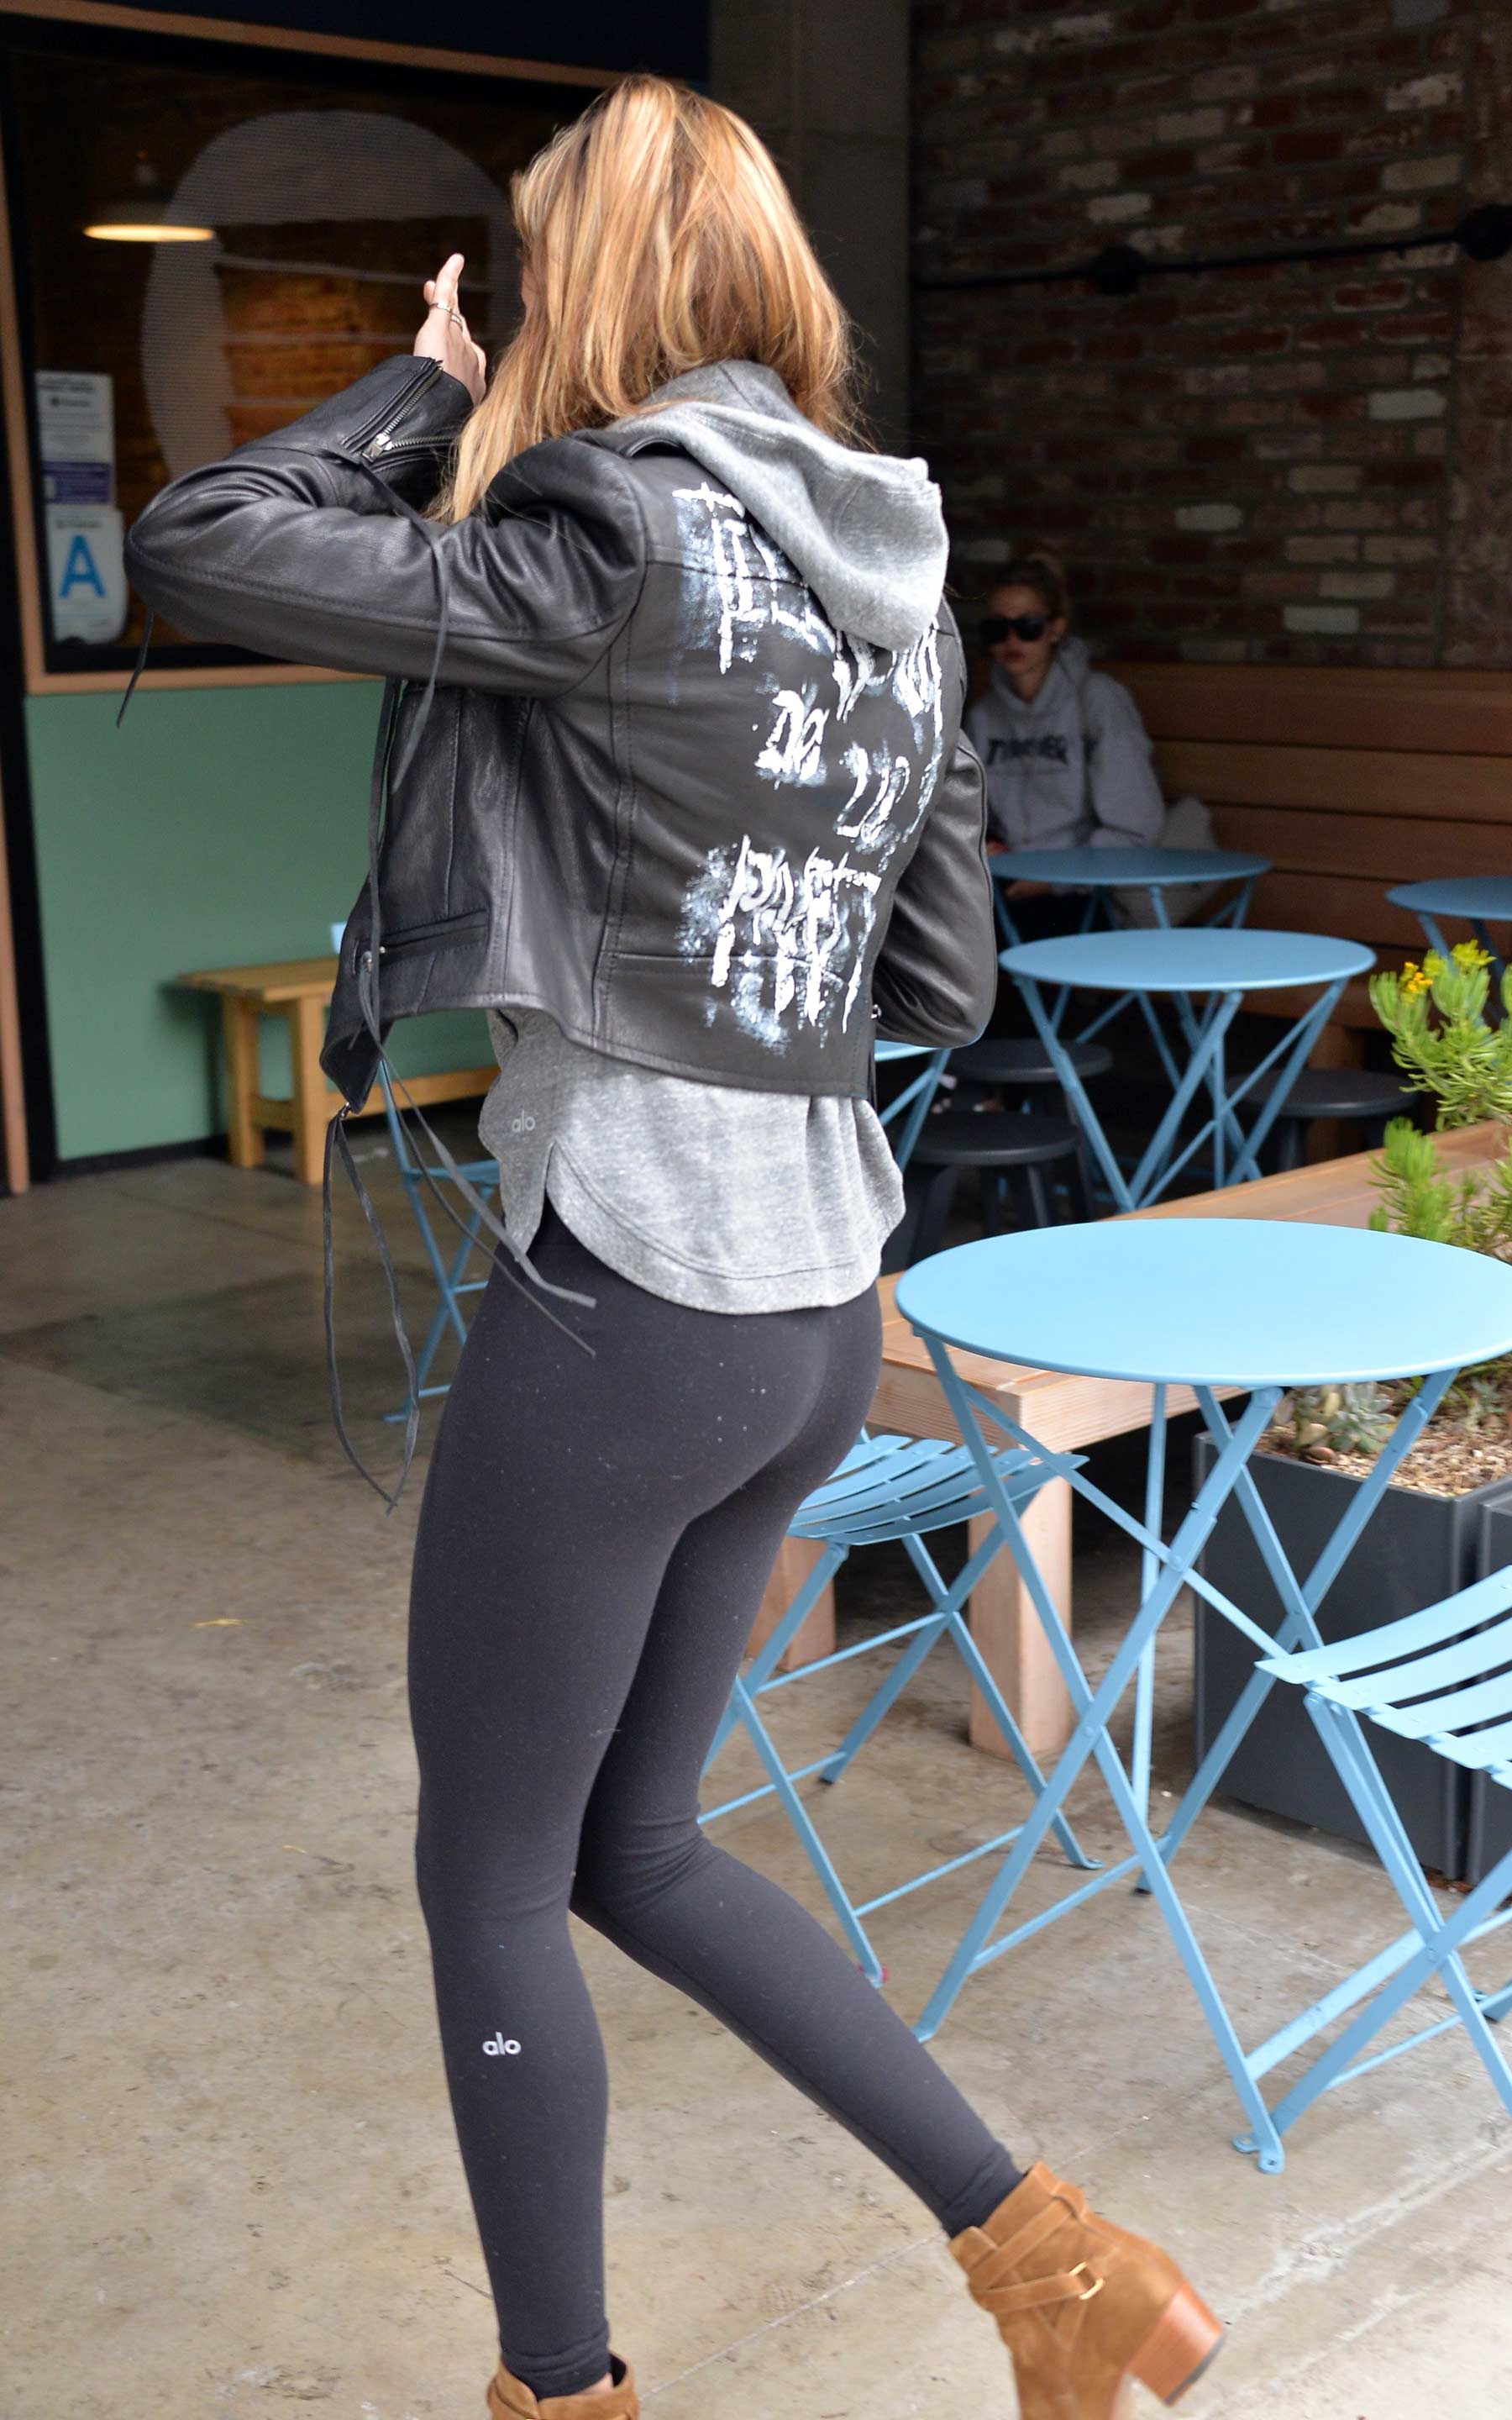 Hailey Baldwin grabbing coffee in Beverly Hills